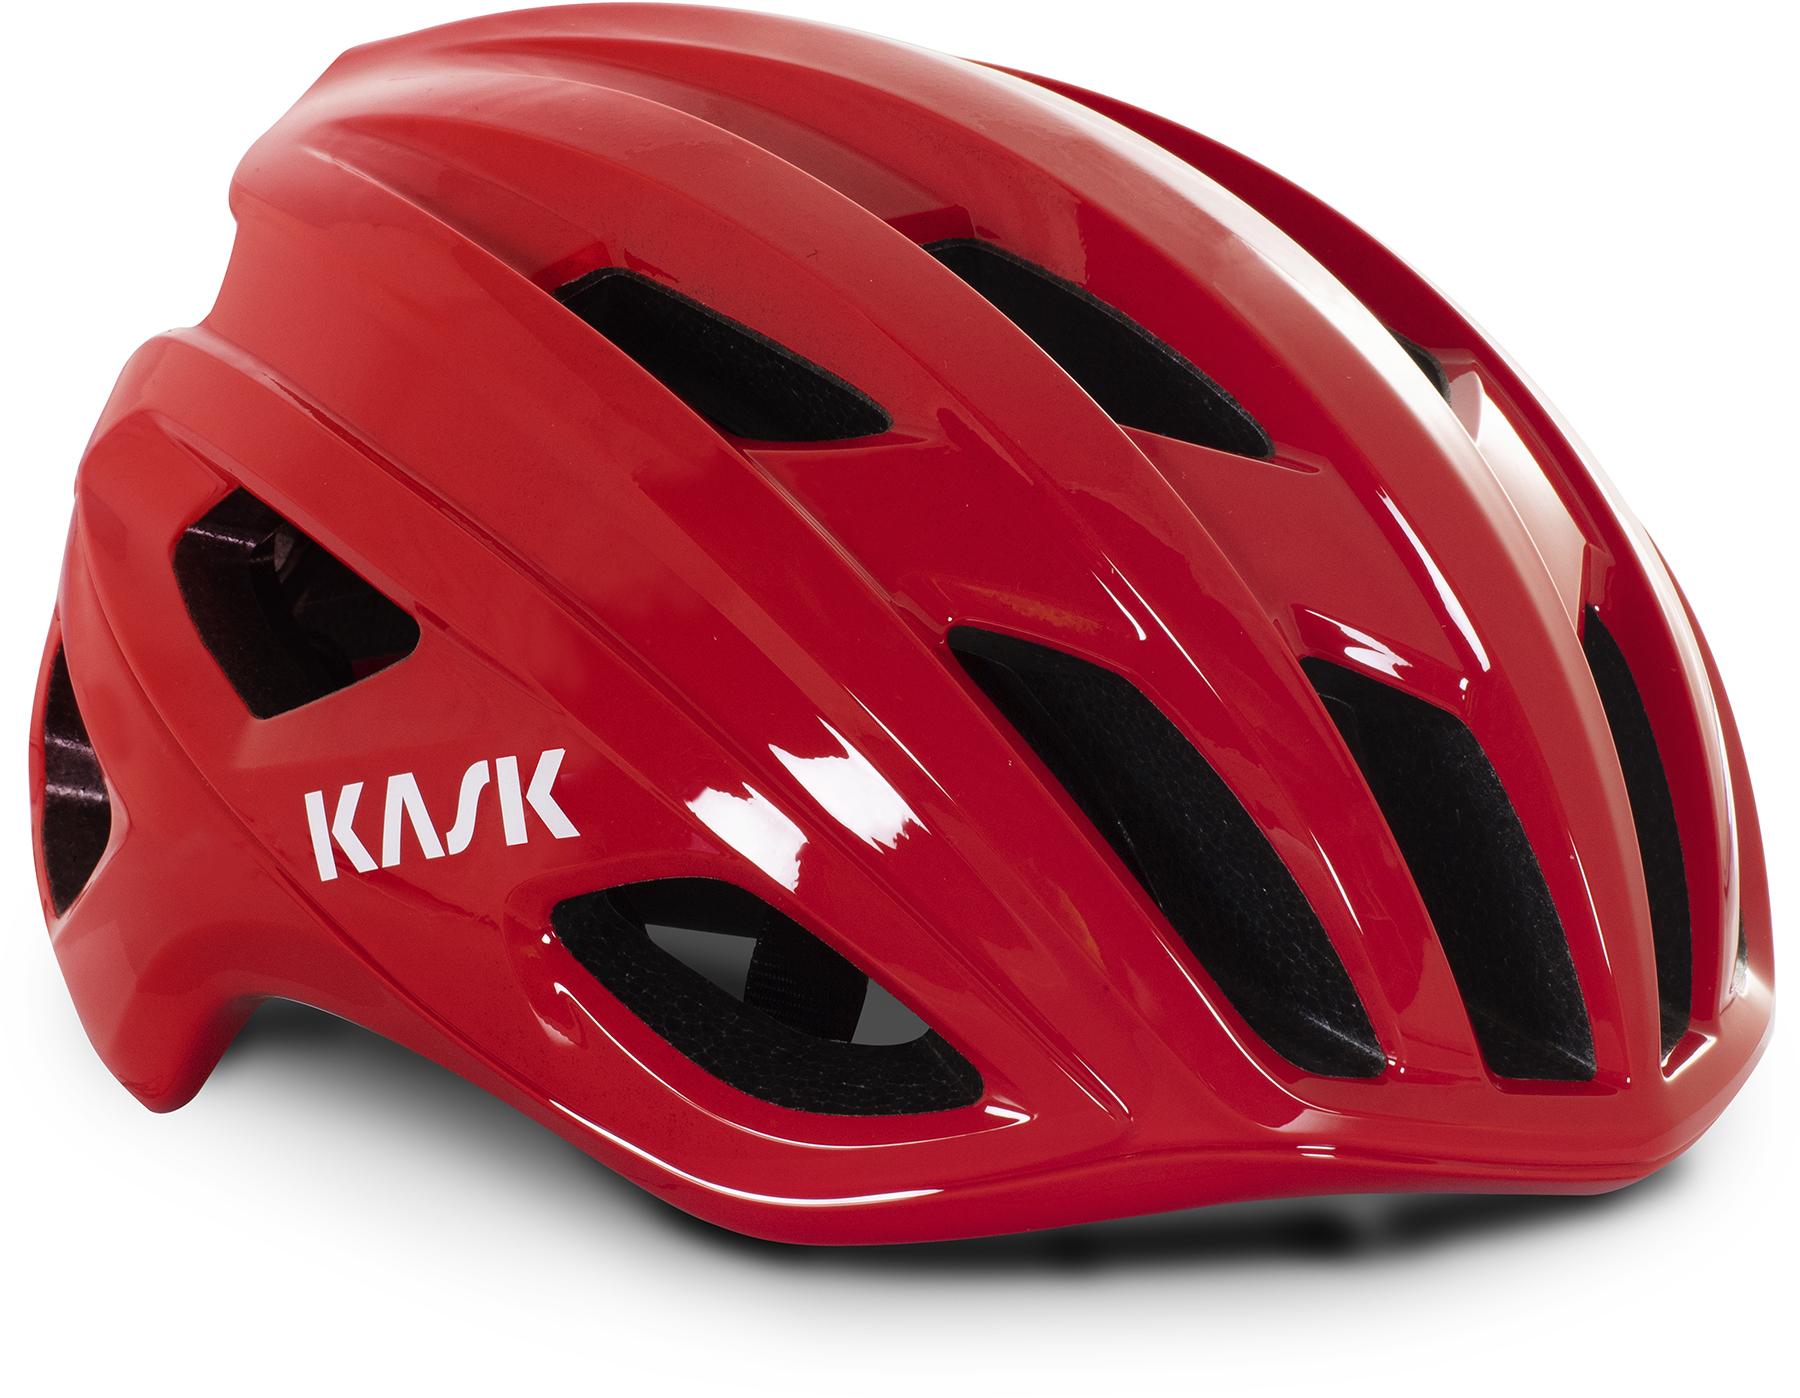 Kask Mojito3 Road Cycling Helmet (wg11) - Red